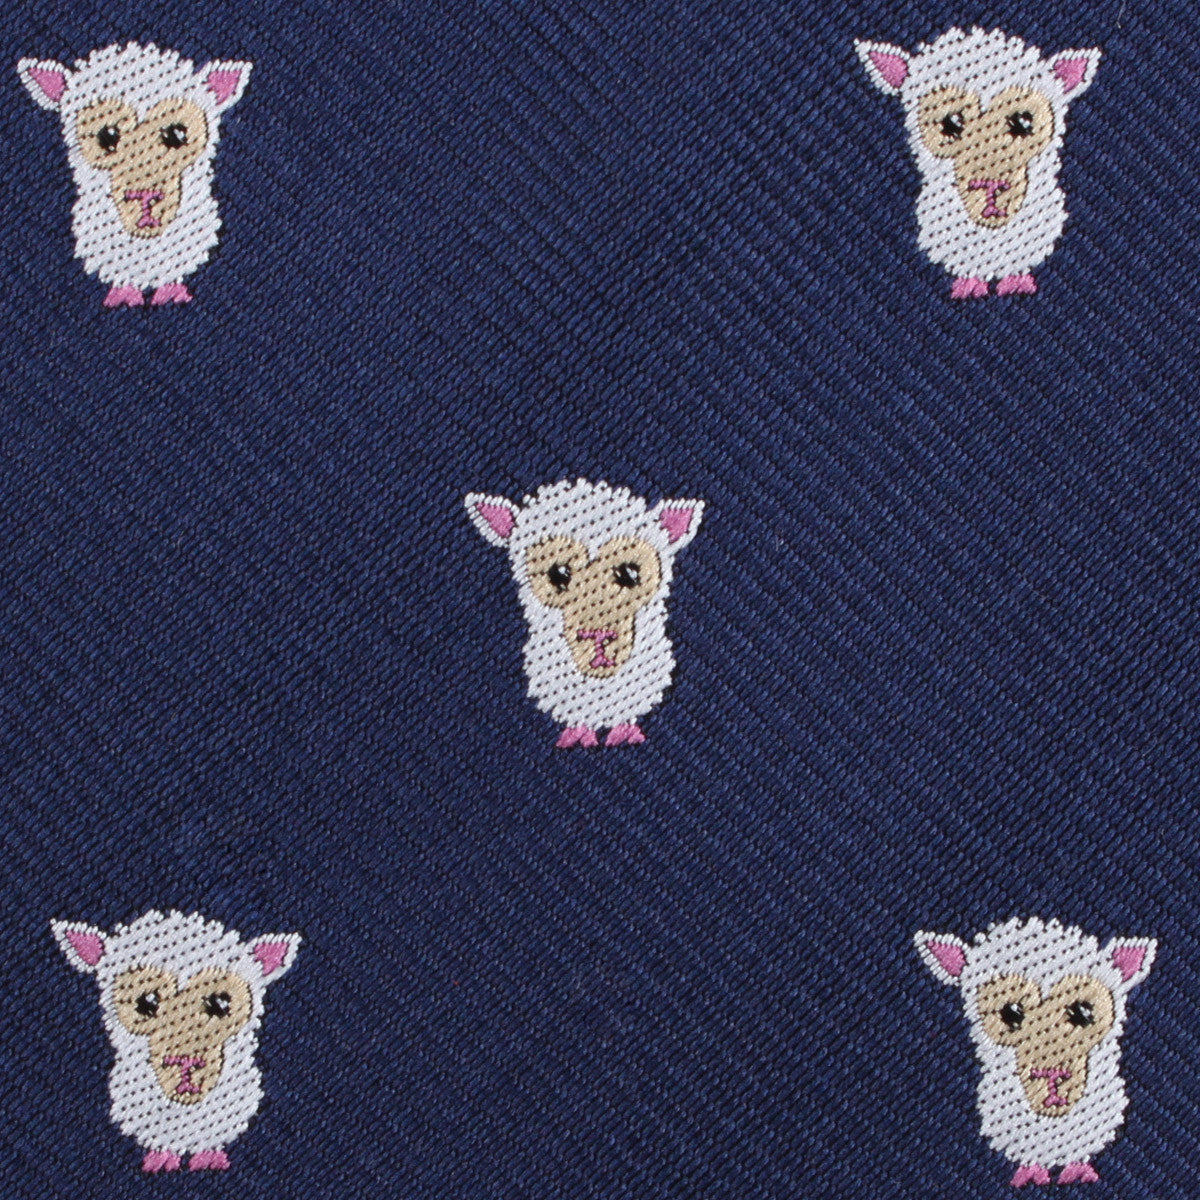 White Sheep Fabric Necktie